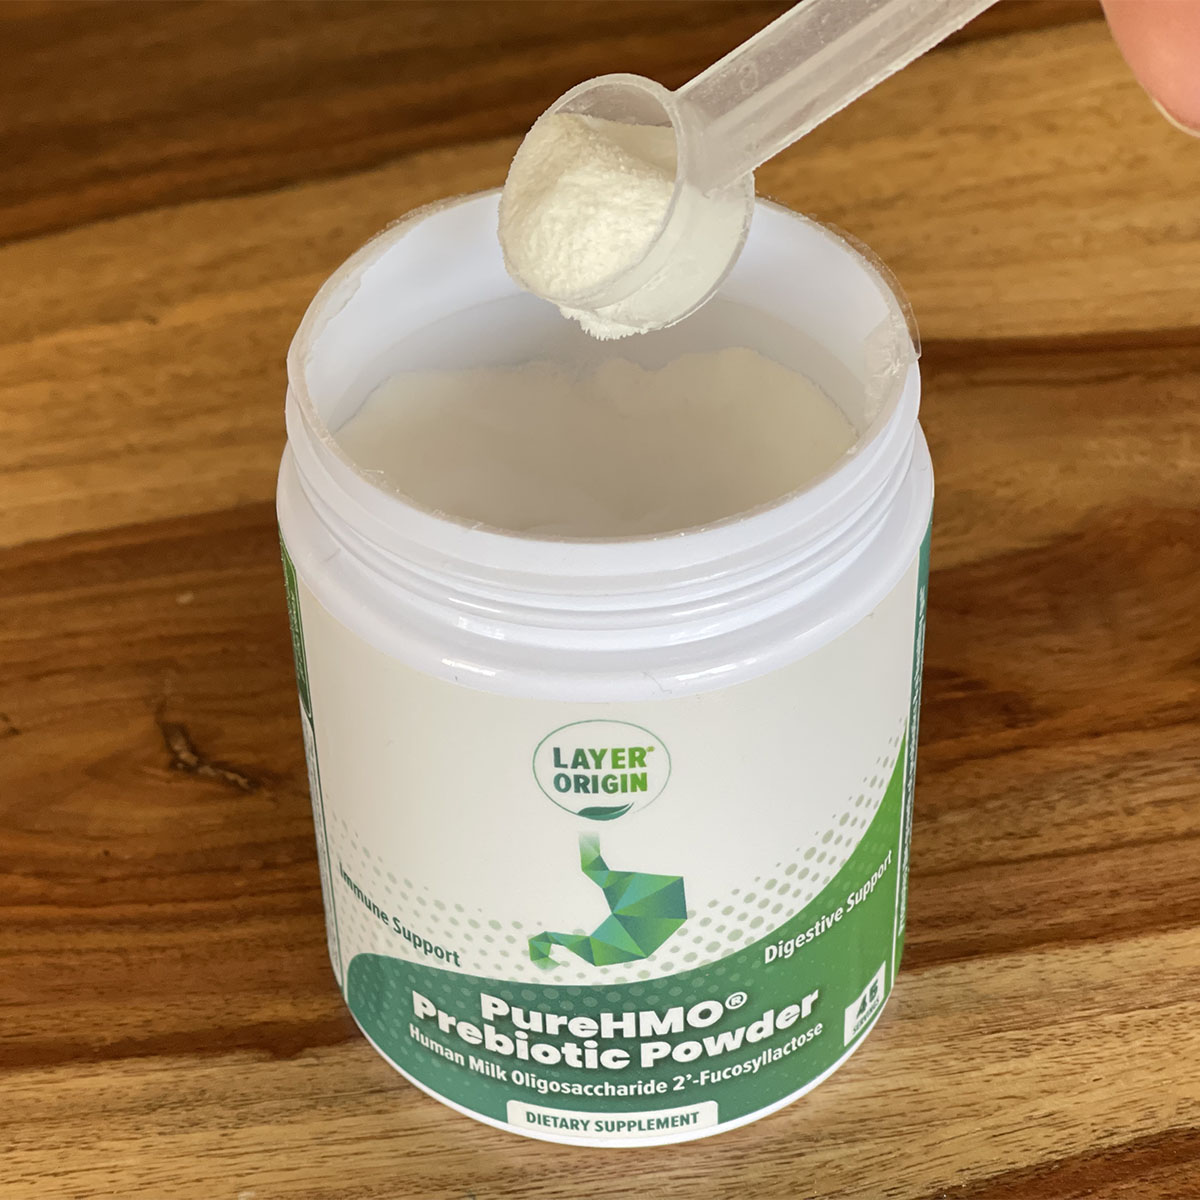 PureHMO Prebiotic Powder and scoop